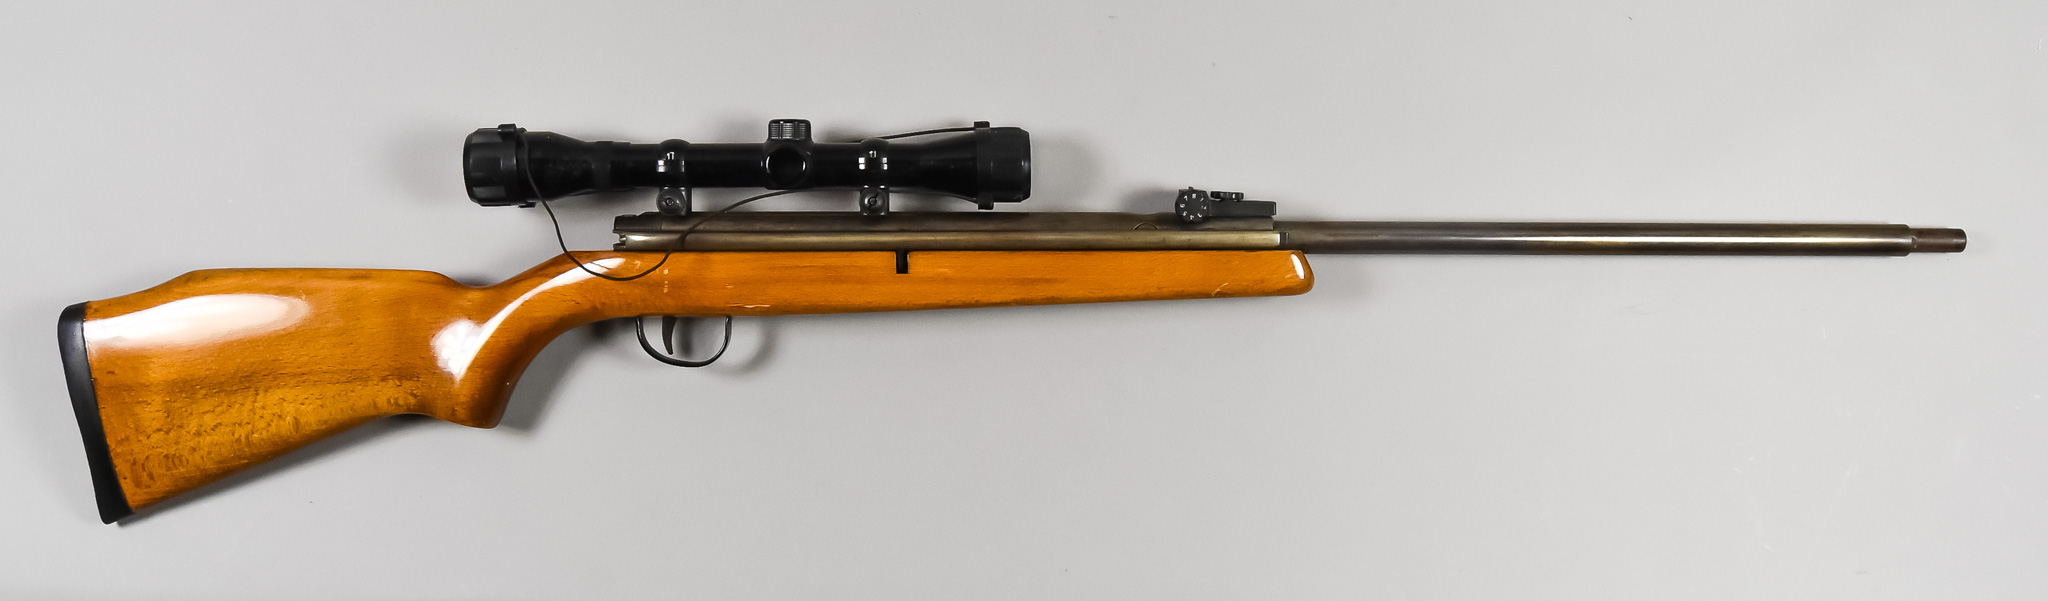 A .22 Side Lever Air Rifle By Webley & Scott Ltd, stripped back, previously blued steel barrel